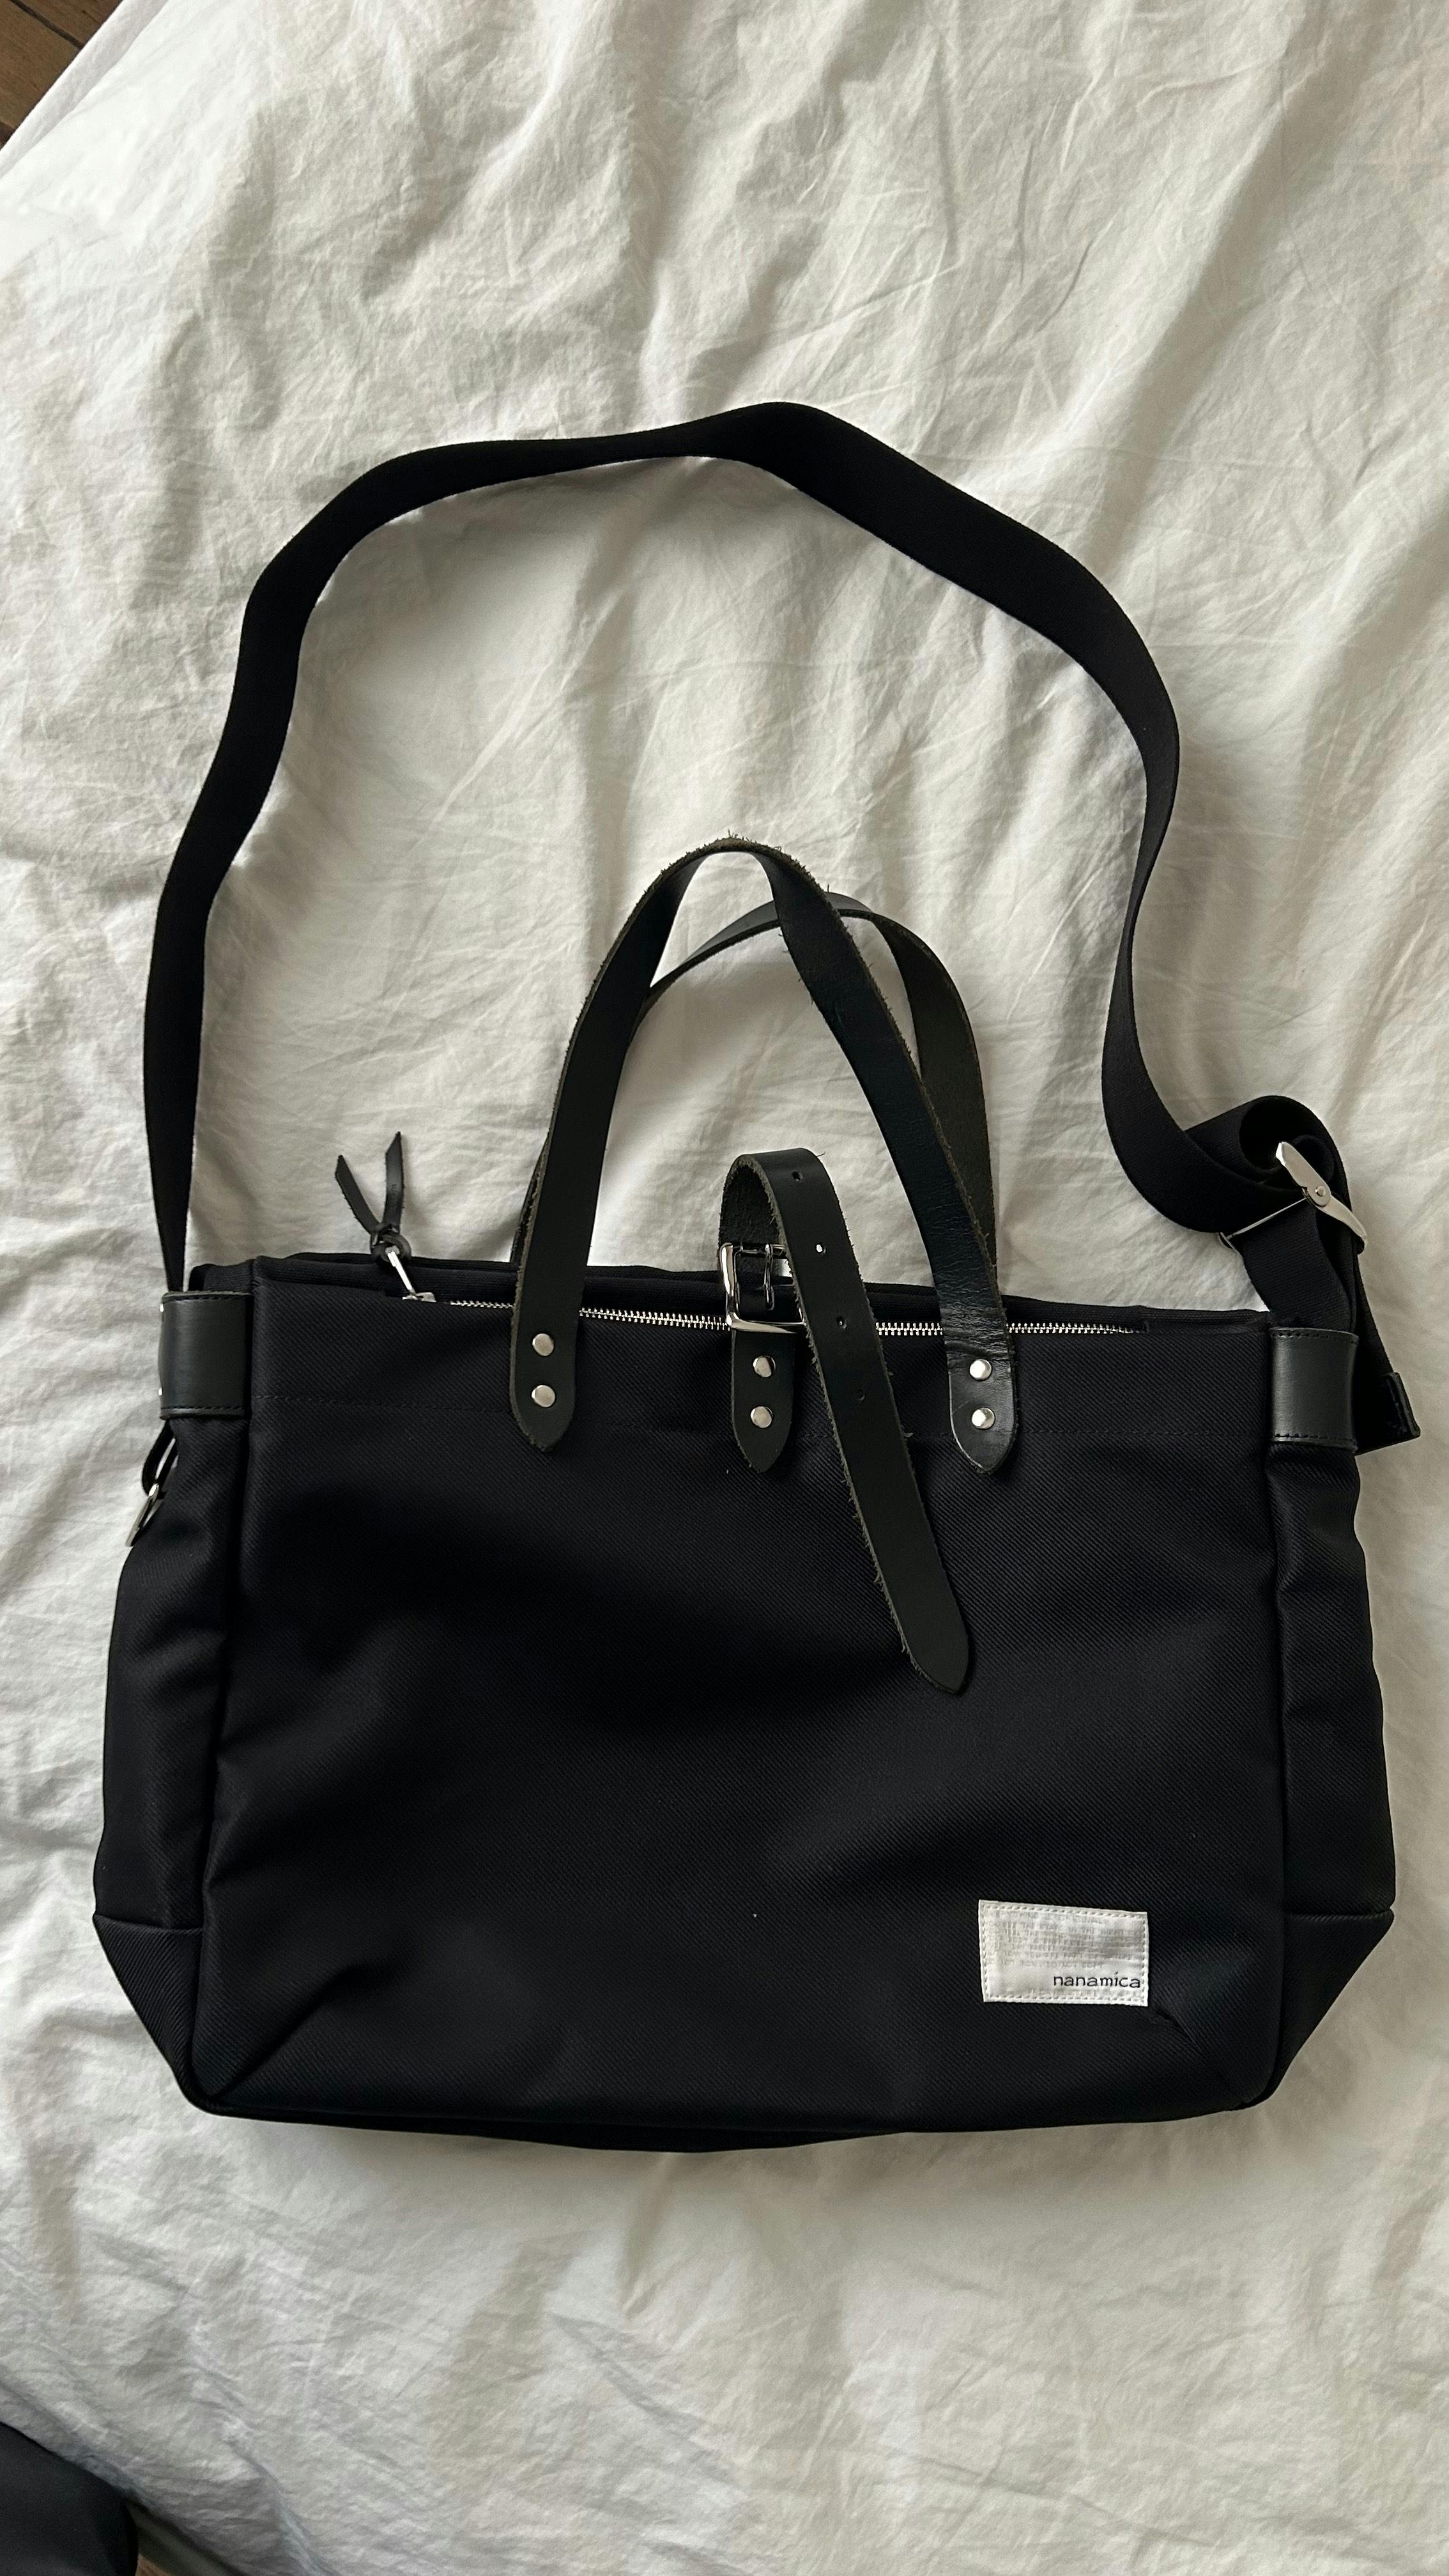 brand new and never worn black cordura bag - 2